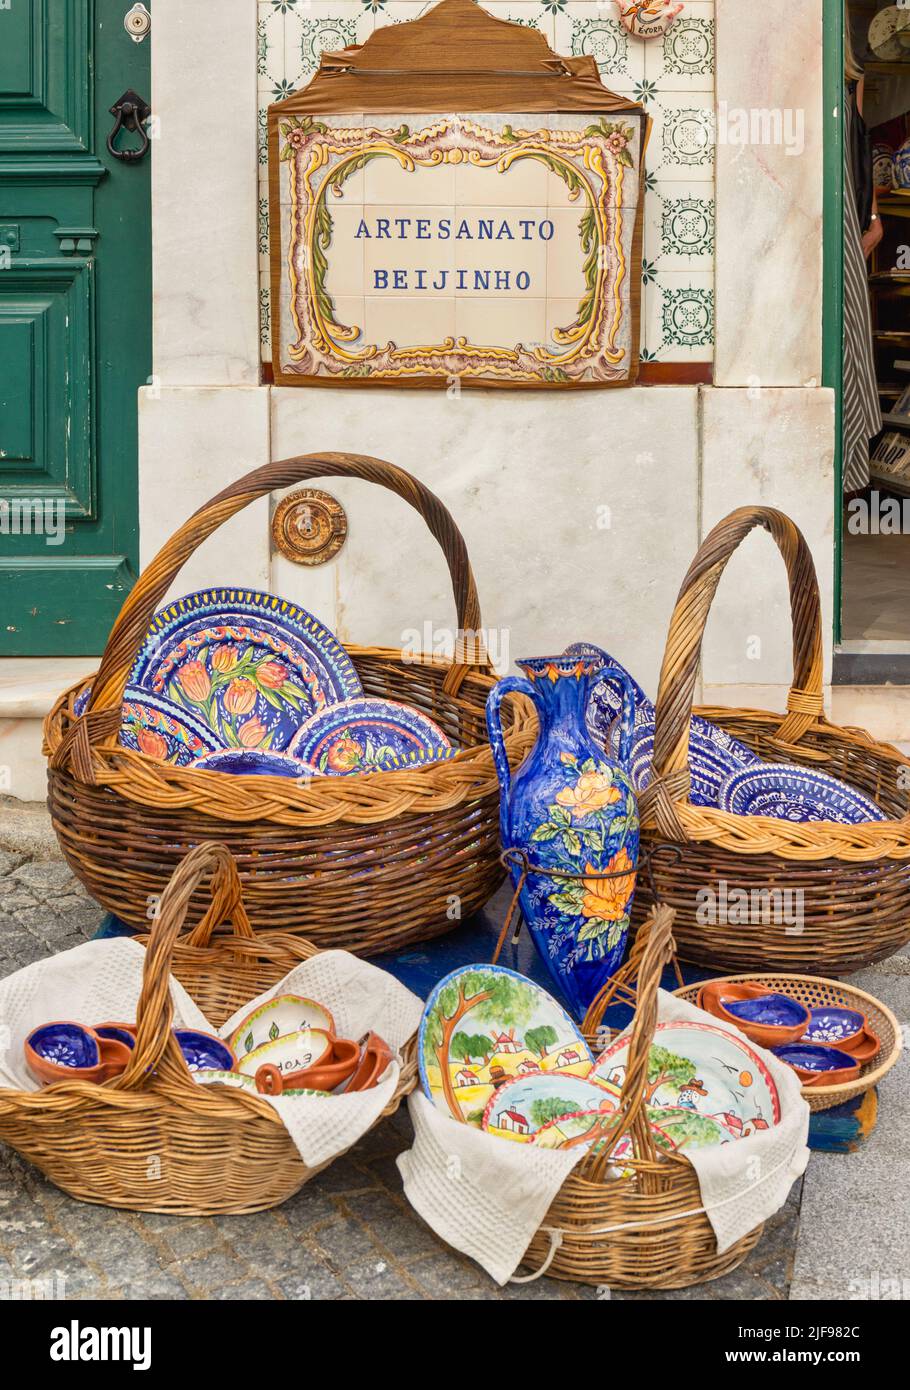 Evora, Evora District, Alentejo, Portugal. Baskets of ceramic souvenirs in street outside shop Artesanato Beijinho. Evora is a UNESCO World Heritage S Stock Photo